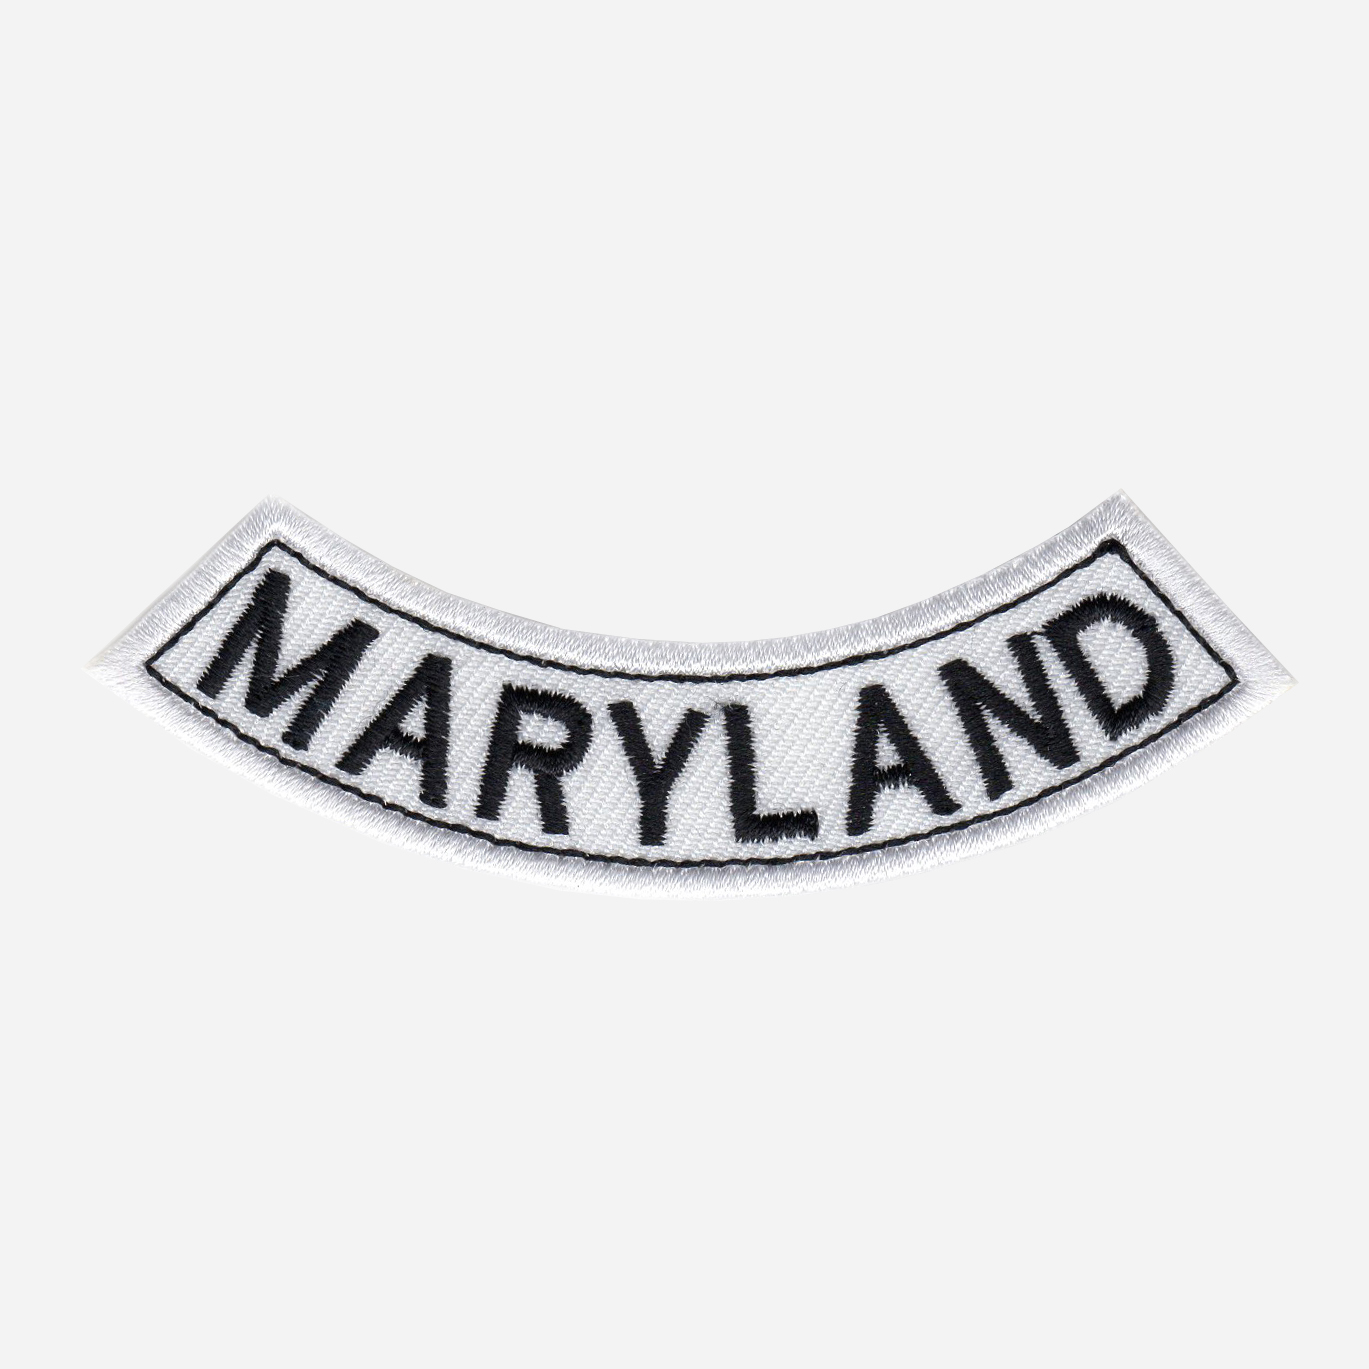 Maryland Mini Bottom Rocker Embroidered Vest Patch